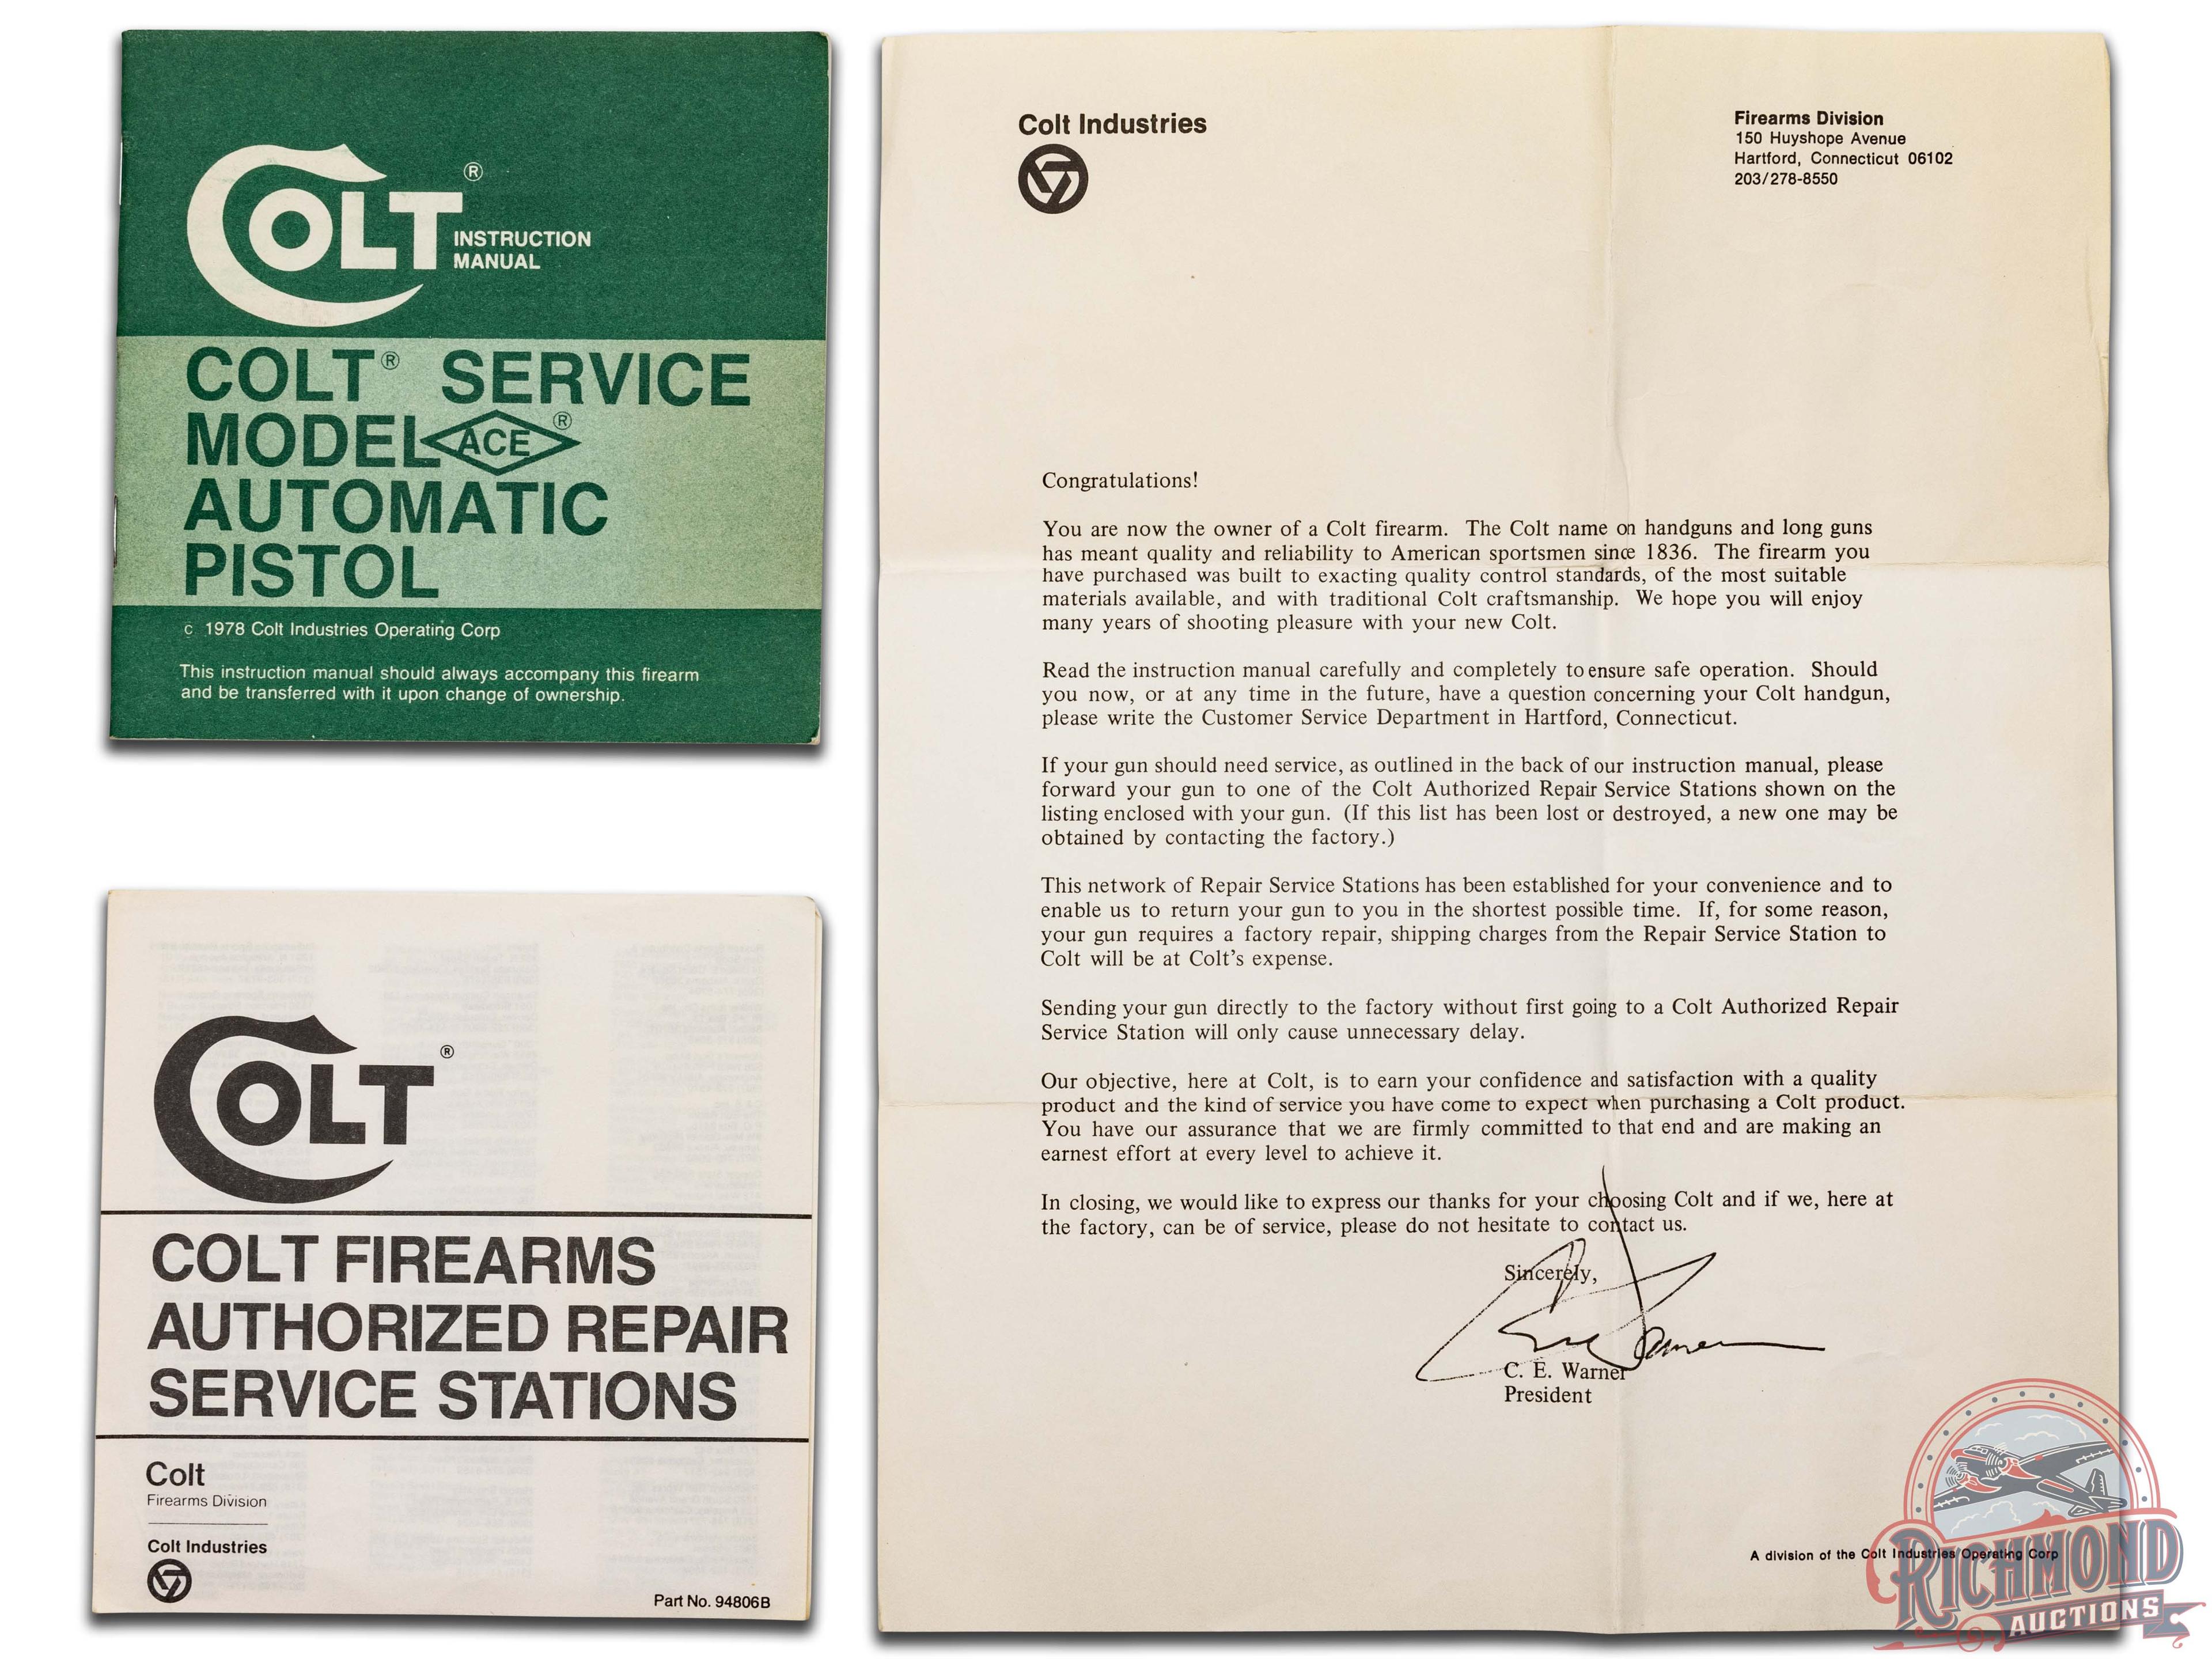 Colt Custom Shop 1981 Signature Special Edition 1911 ACE .22 LR Semi-Auto Pistol in Original Box